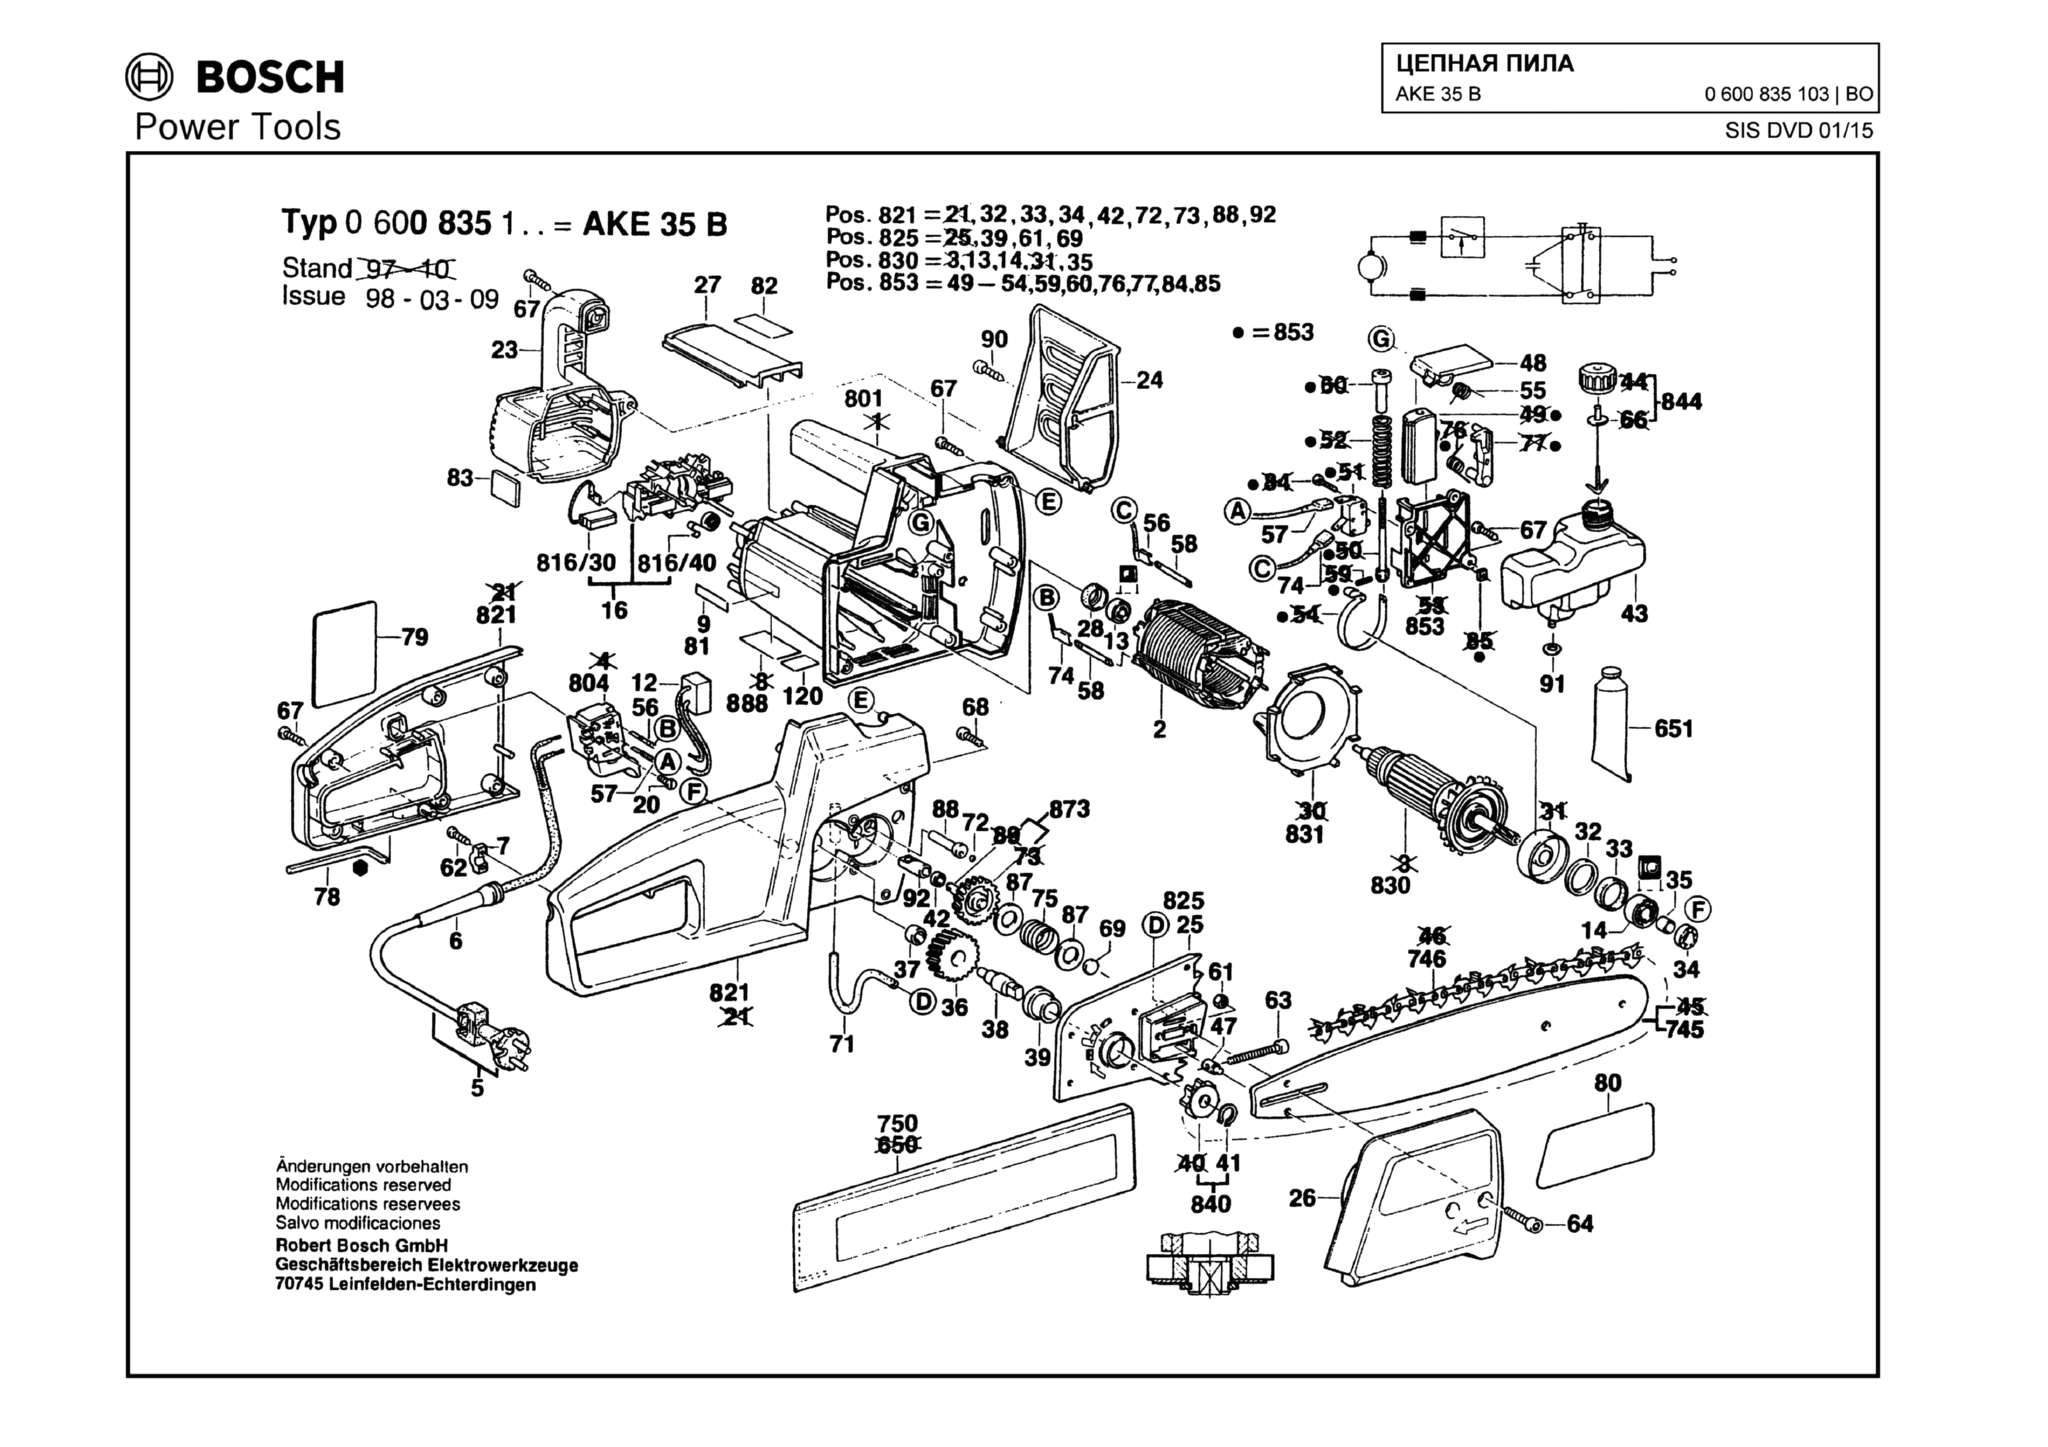 Запчасти, схема и деталировка Bosch AKE 35 B (ТИП 0600835103)